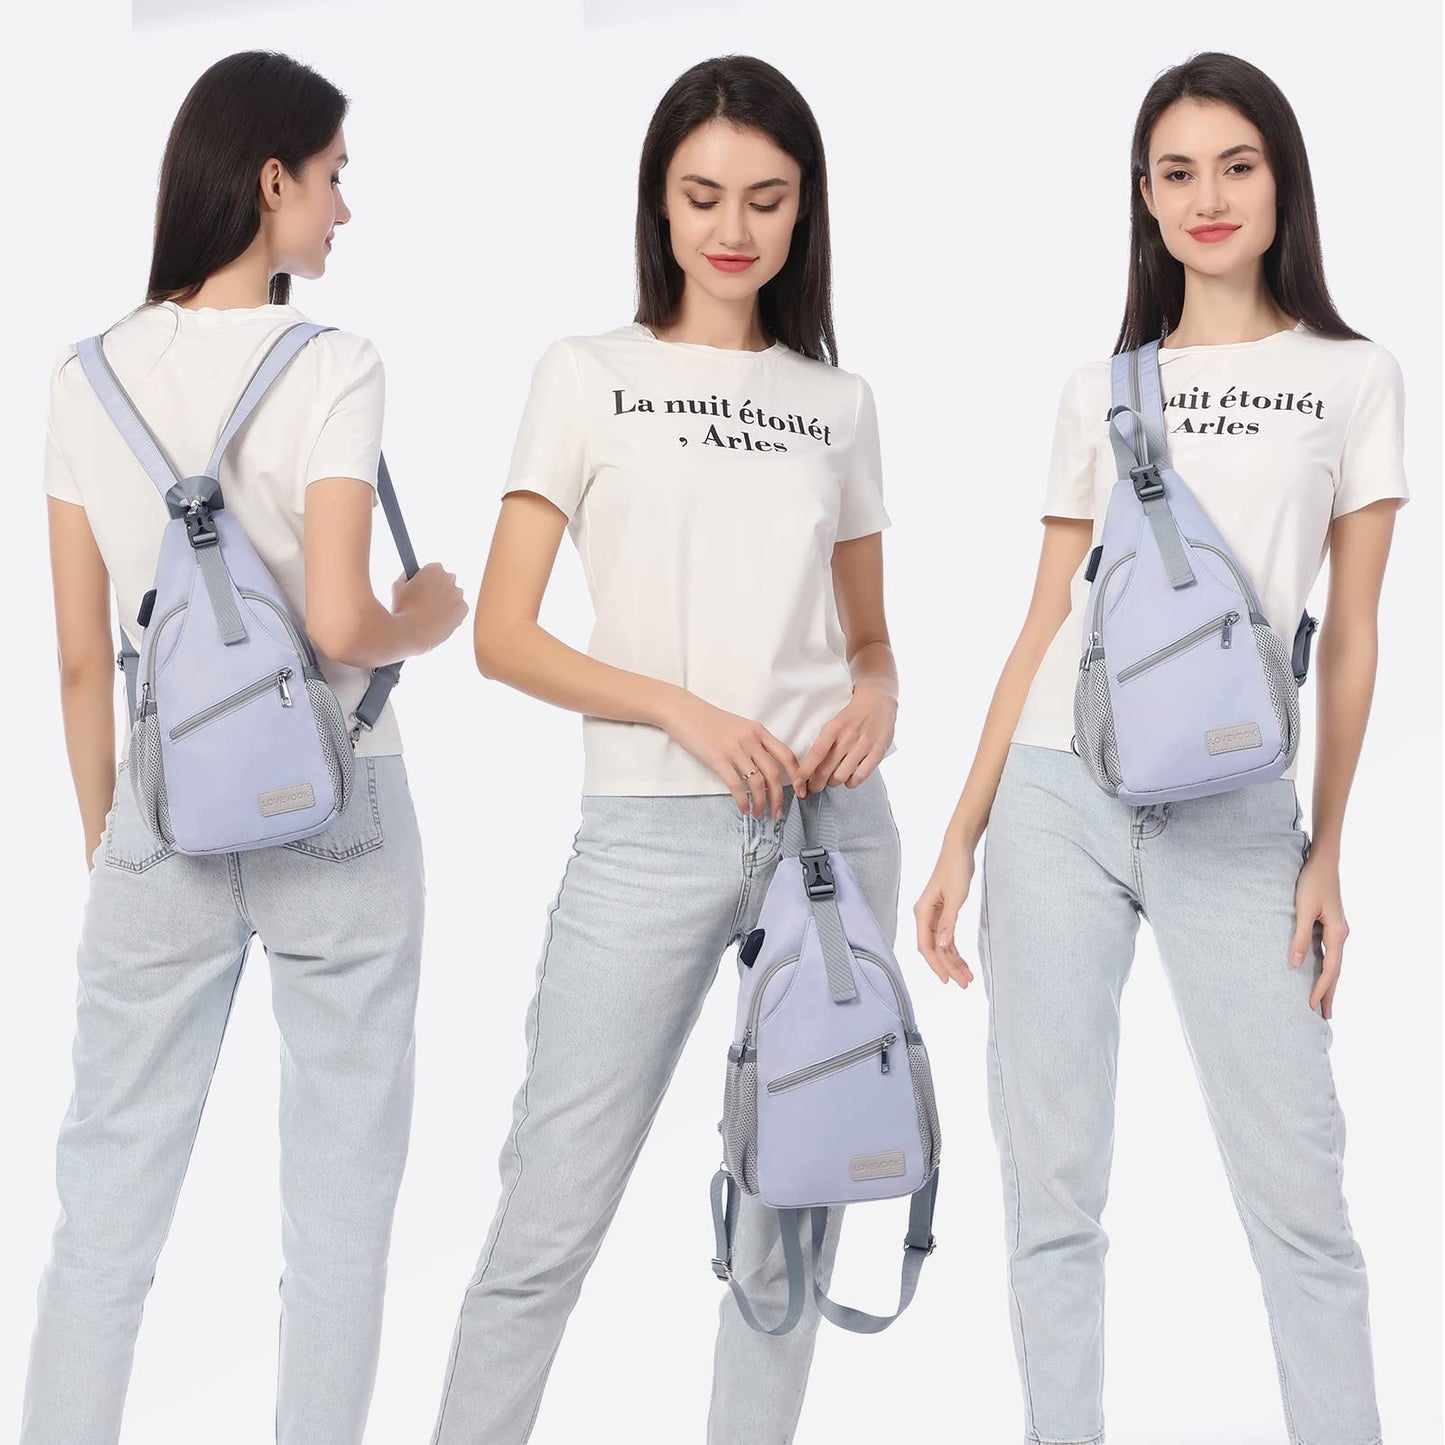 LOVEVOOK Sling Bag for Women Casual Daypack Nylon Crossbody Sling Backpack Travel Shoulder Bag Hiking Daypack